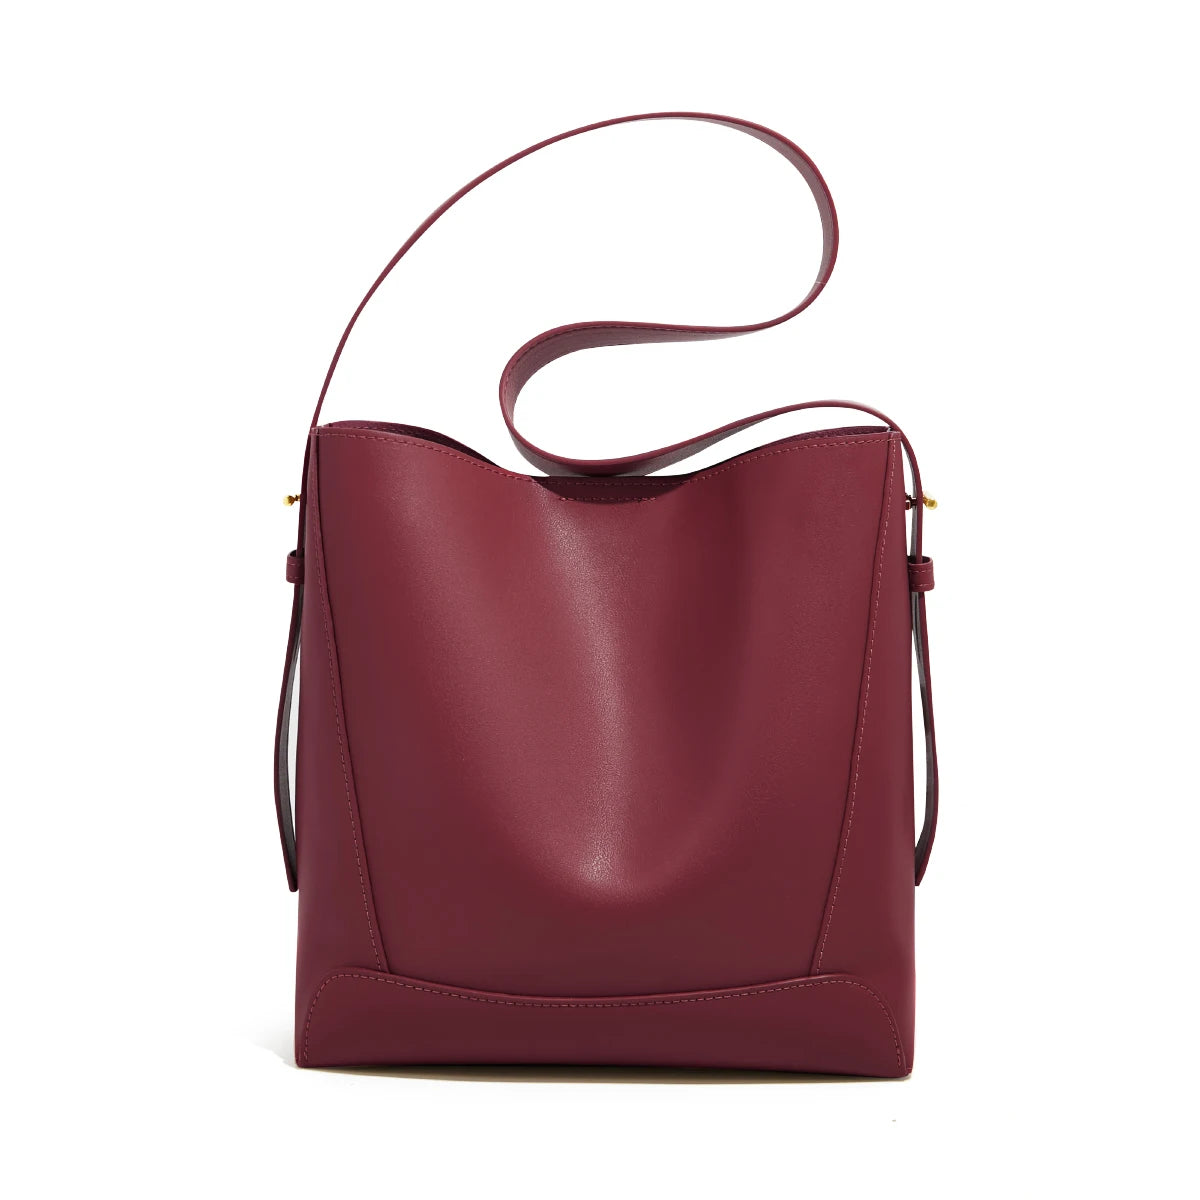 FOXER Lady Fashion Retro Shoulder Bag Large Capacity Red